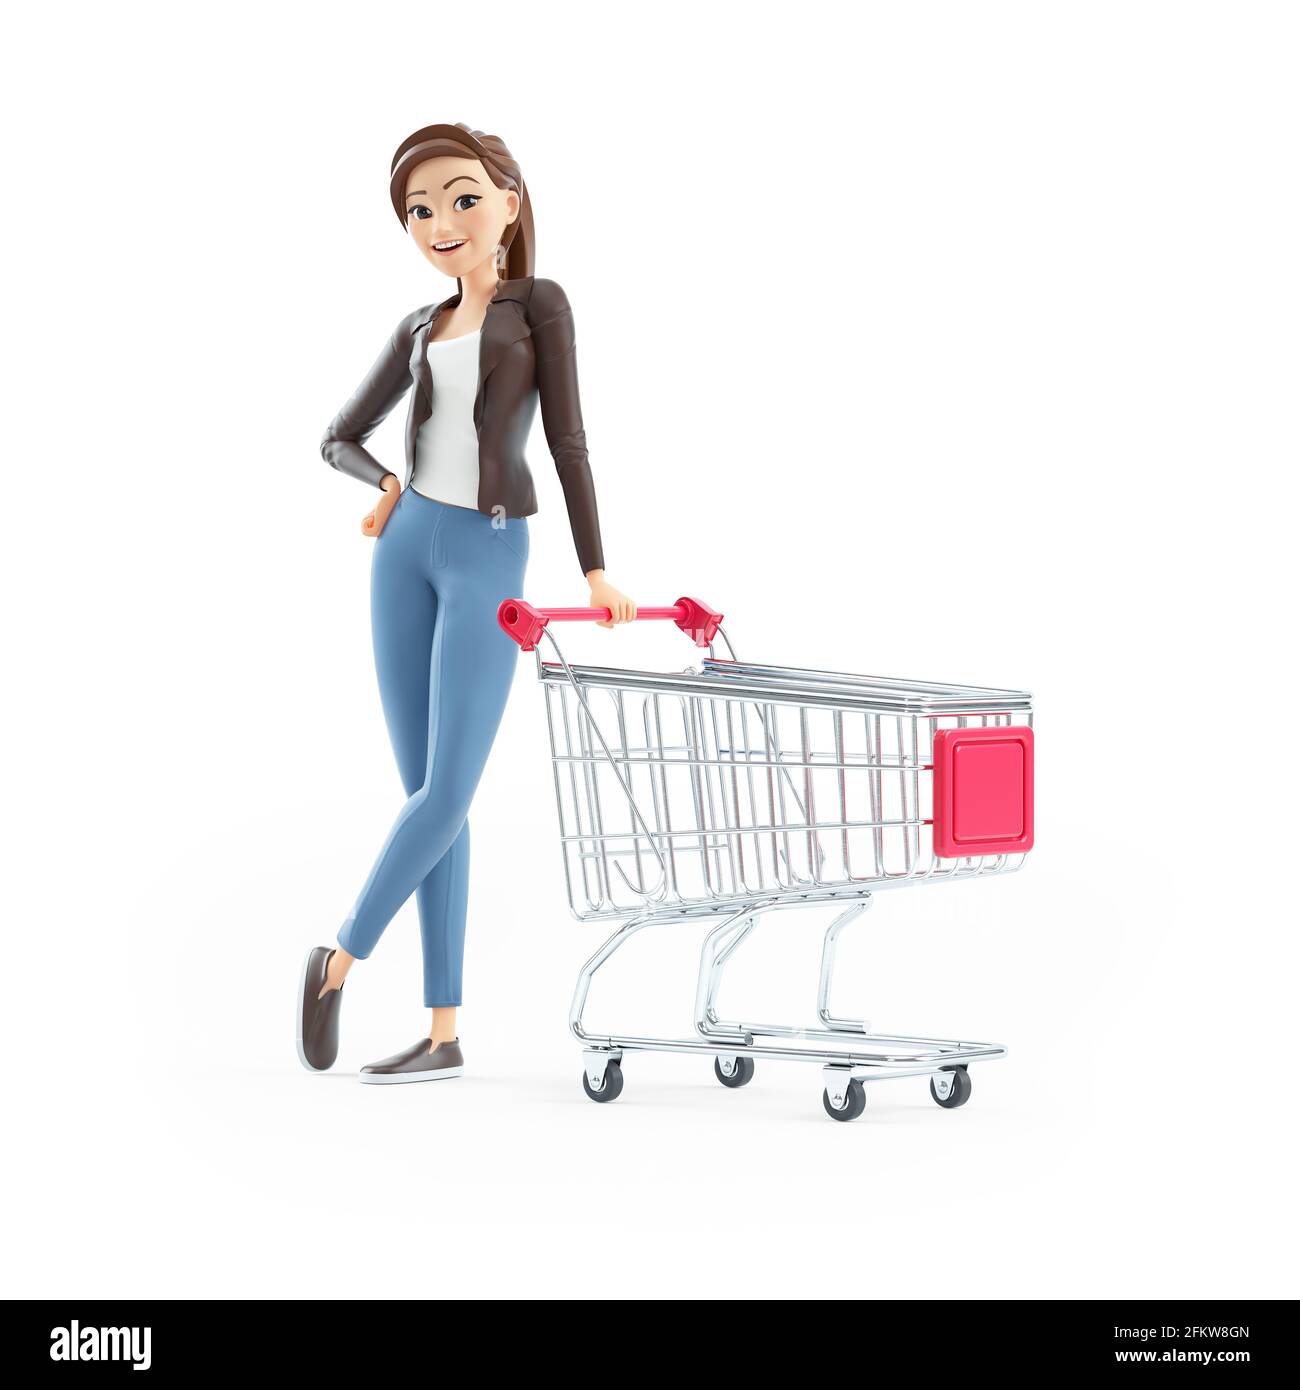 Shopping cart cartoon hi-res stock photography and images - Alamy